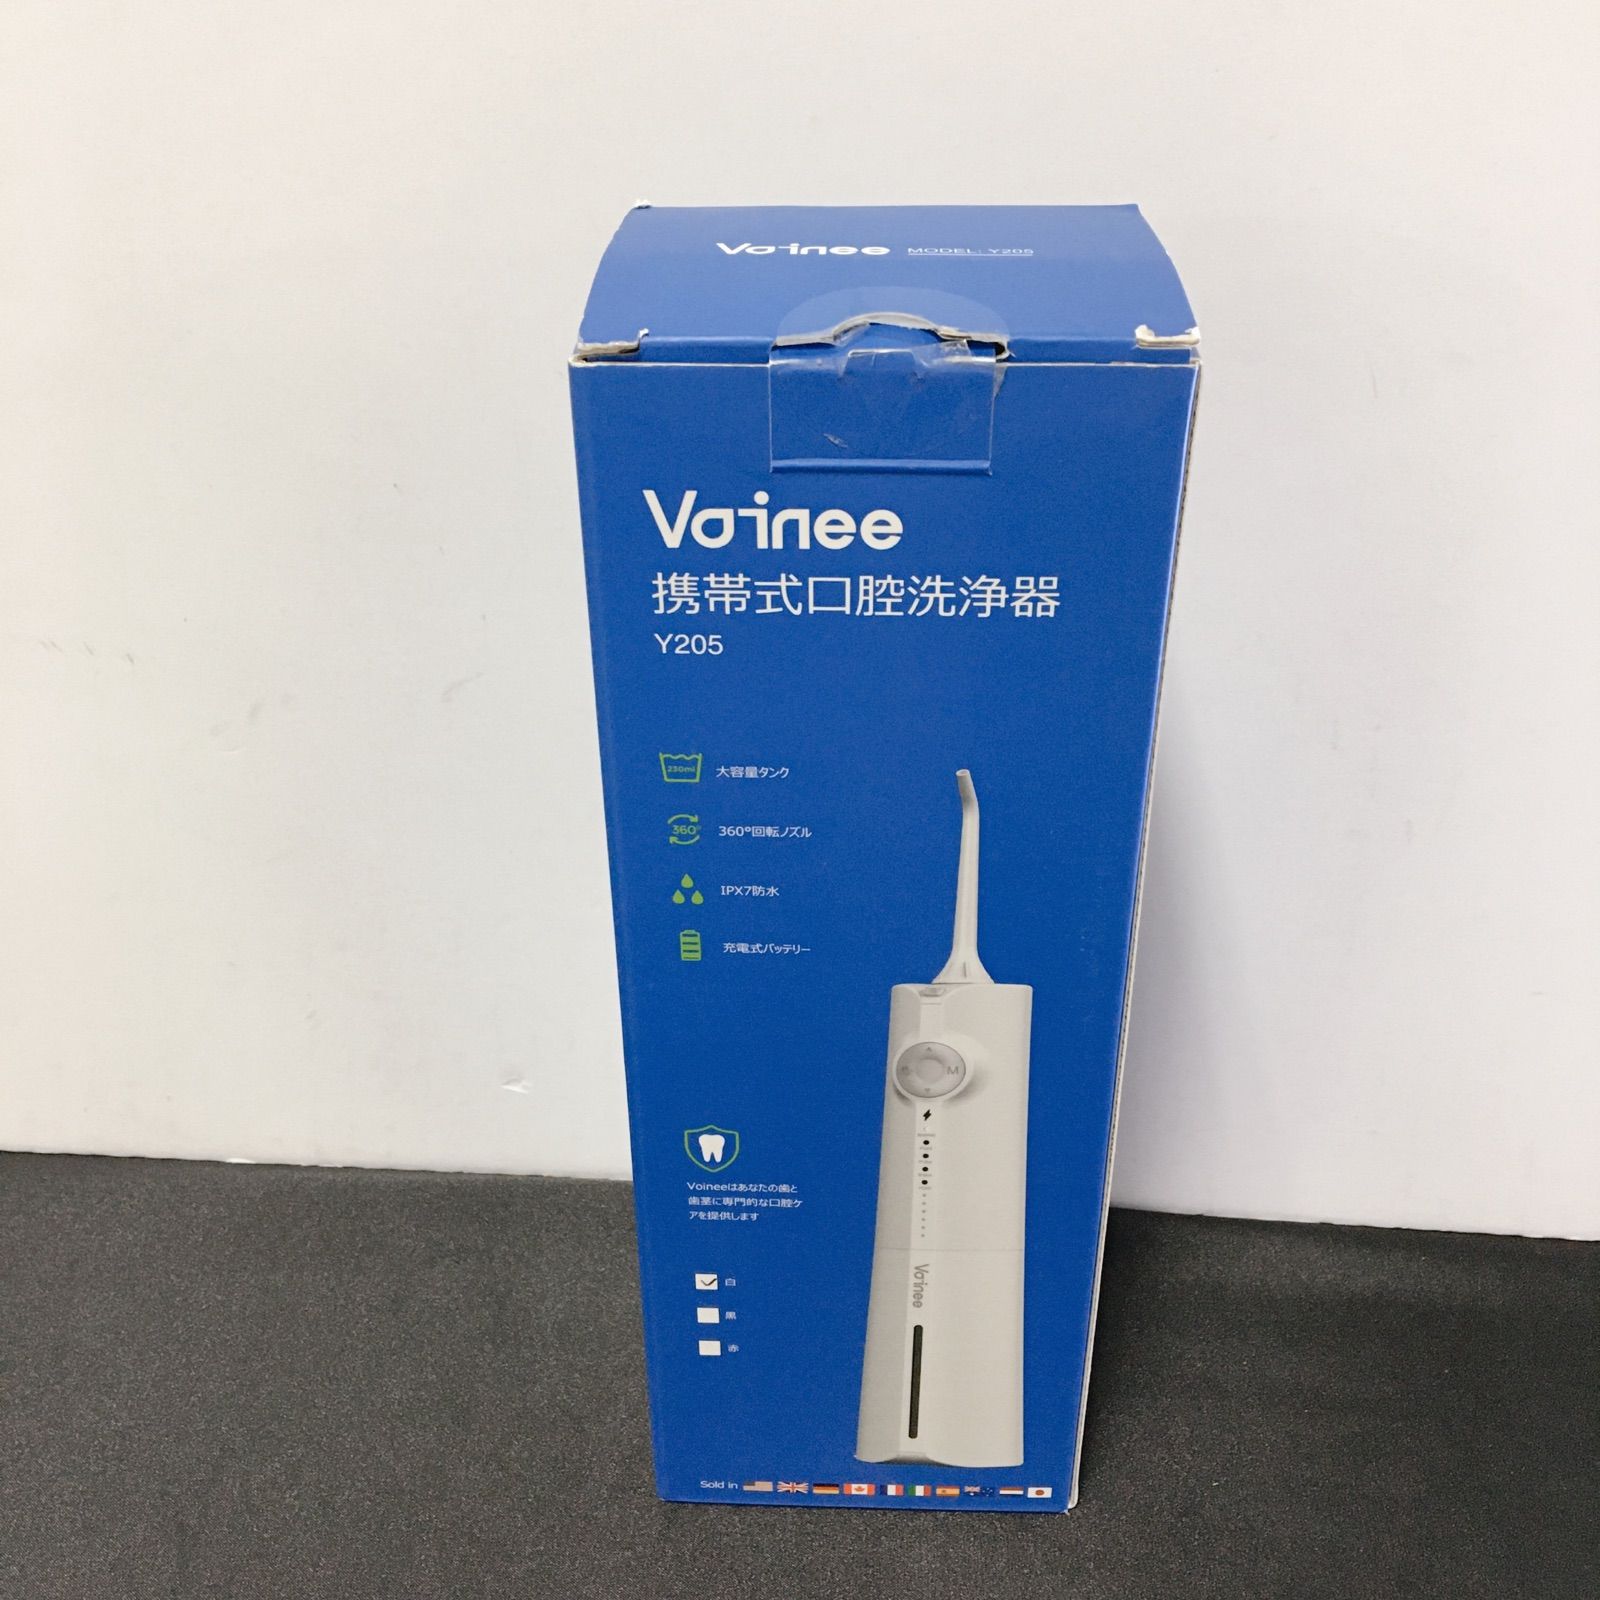 Voinee Care 口腔洗浄器 携帯型歯間ジェット洗浄機 ホワイト - 健康